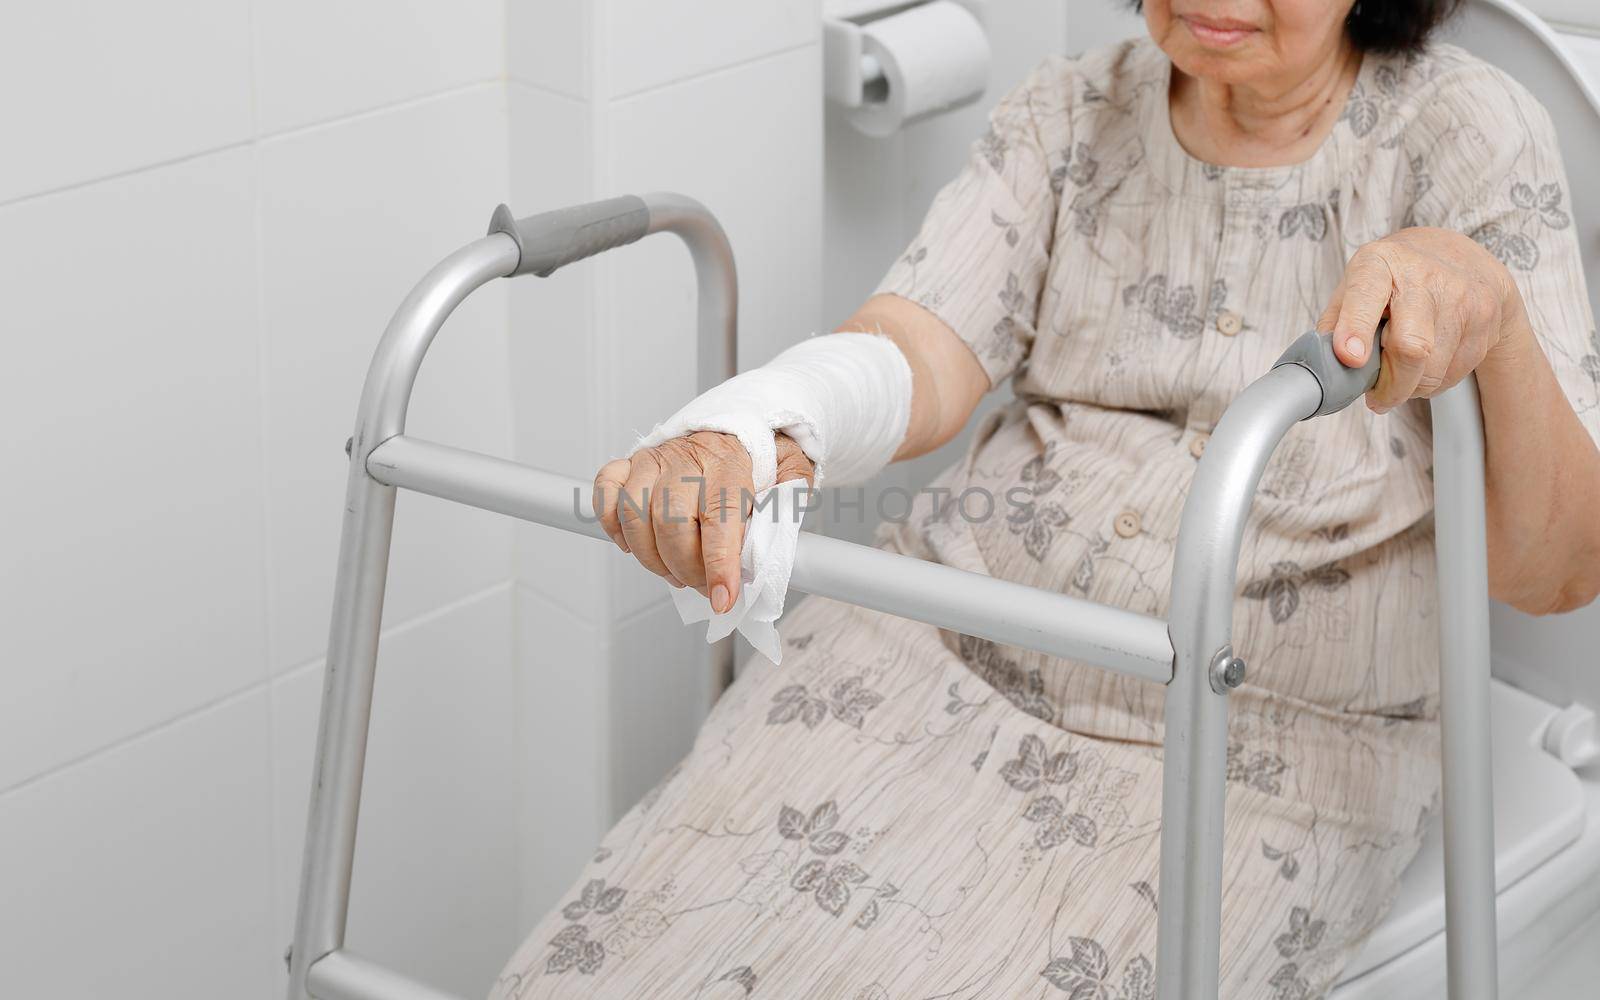 Senior women using the toilet with walker.